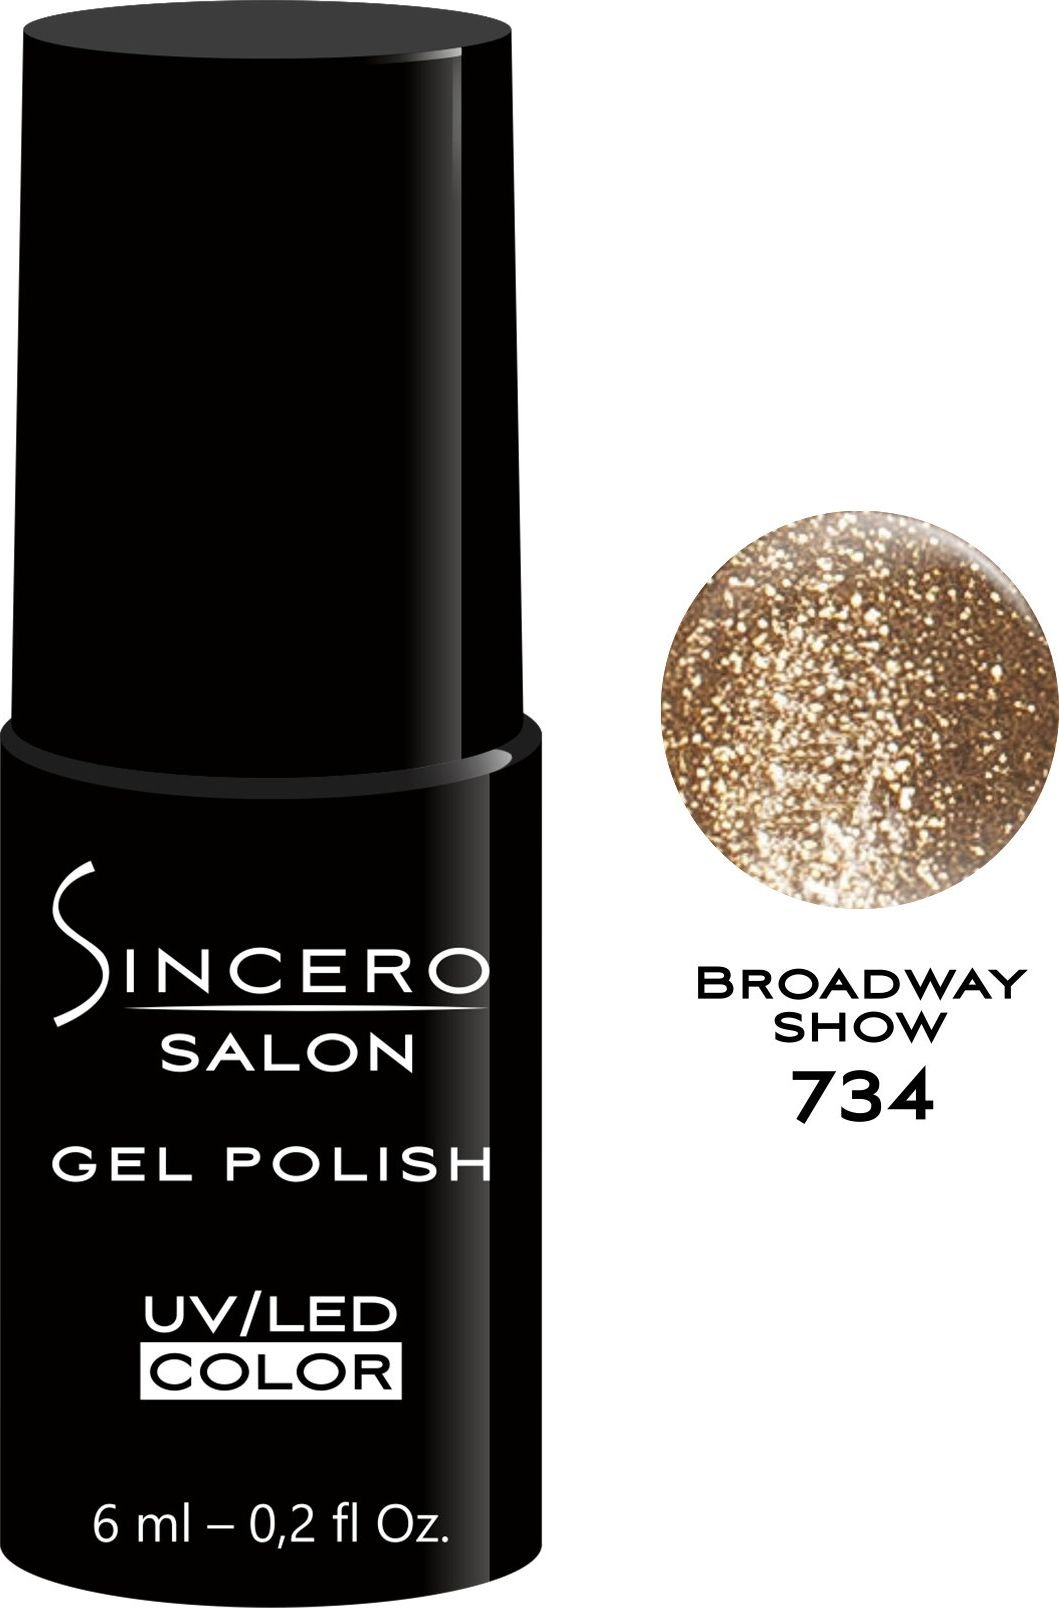 Sincero Salon Gel Polish UV/LED 734 Broadway Show 6ml